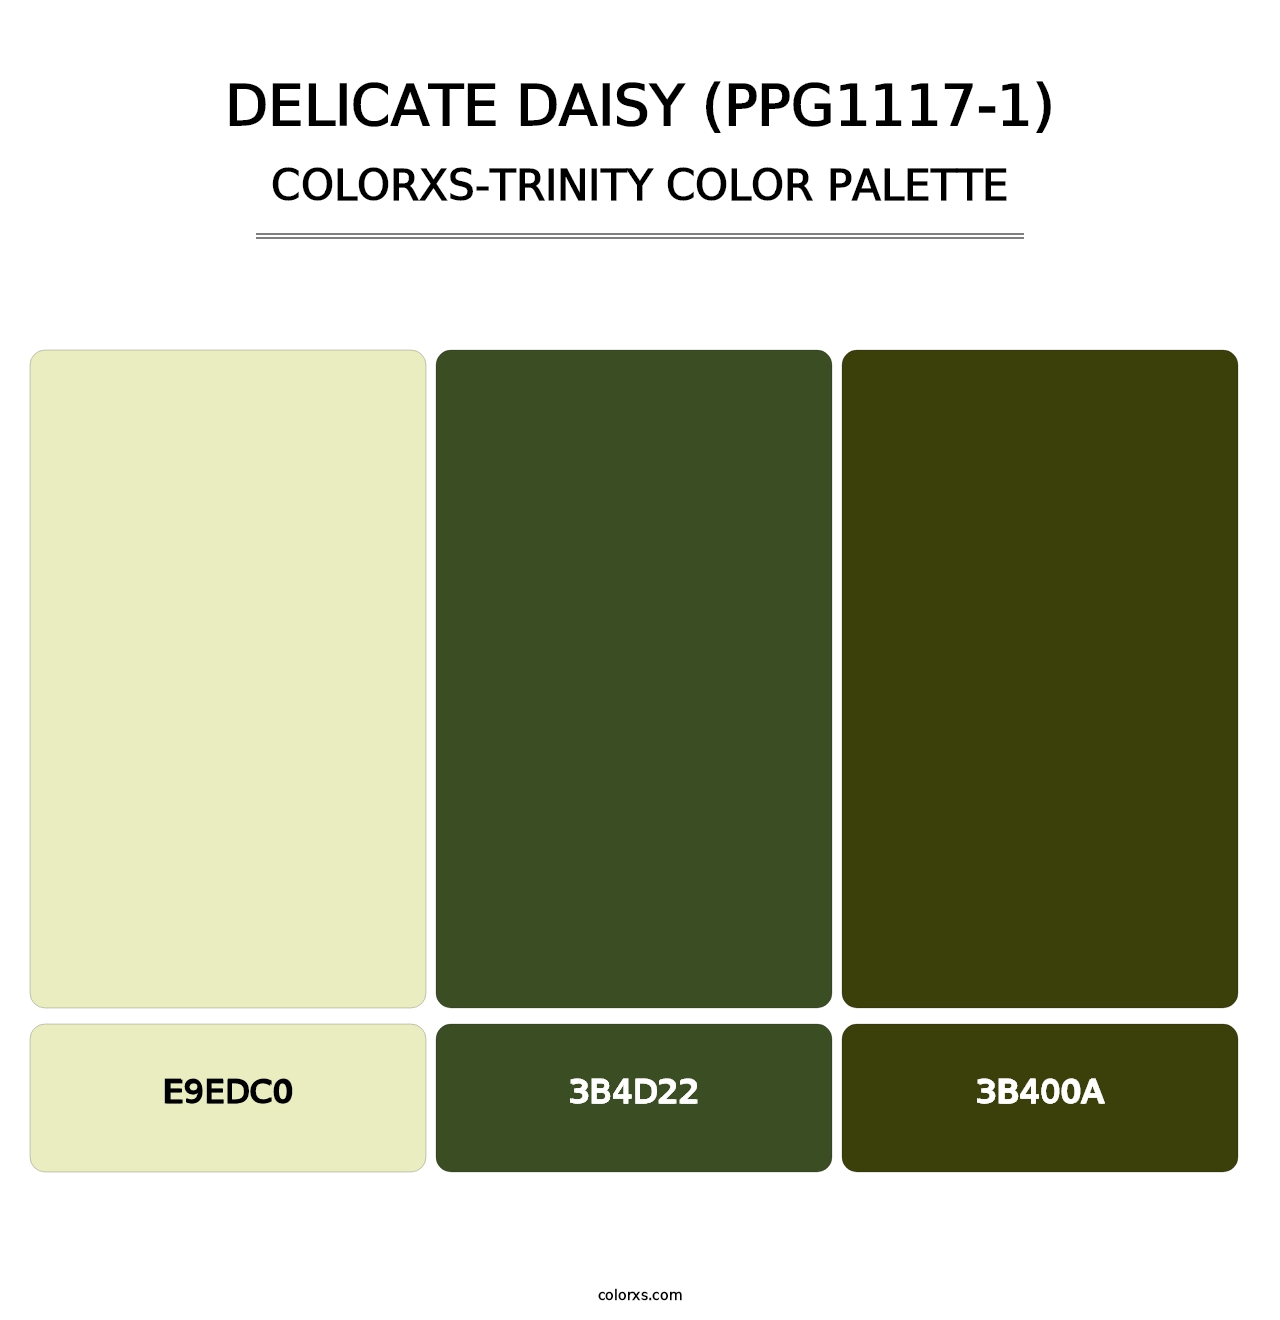 Delicate Daisy (PPG1117-1) - Colorxs Trinity Palette